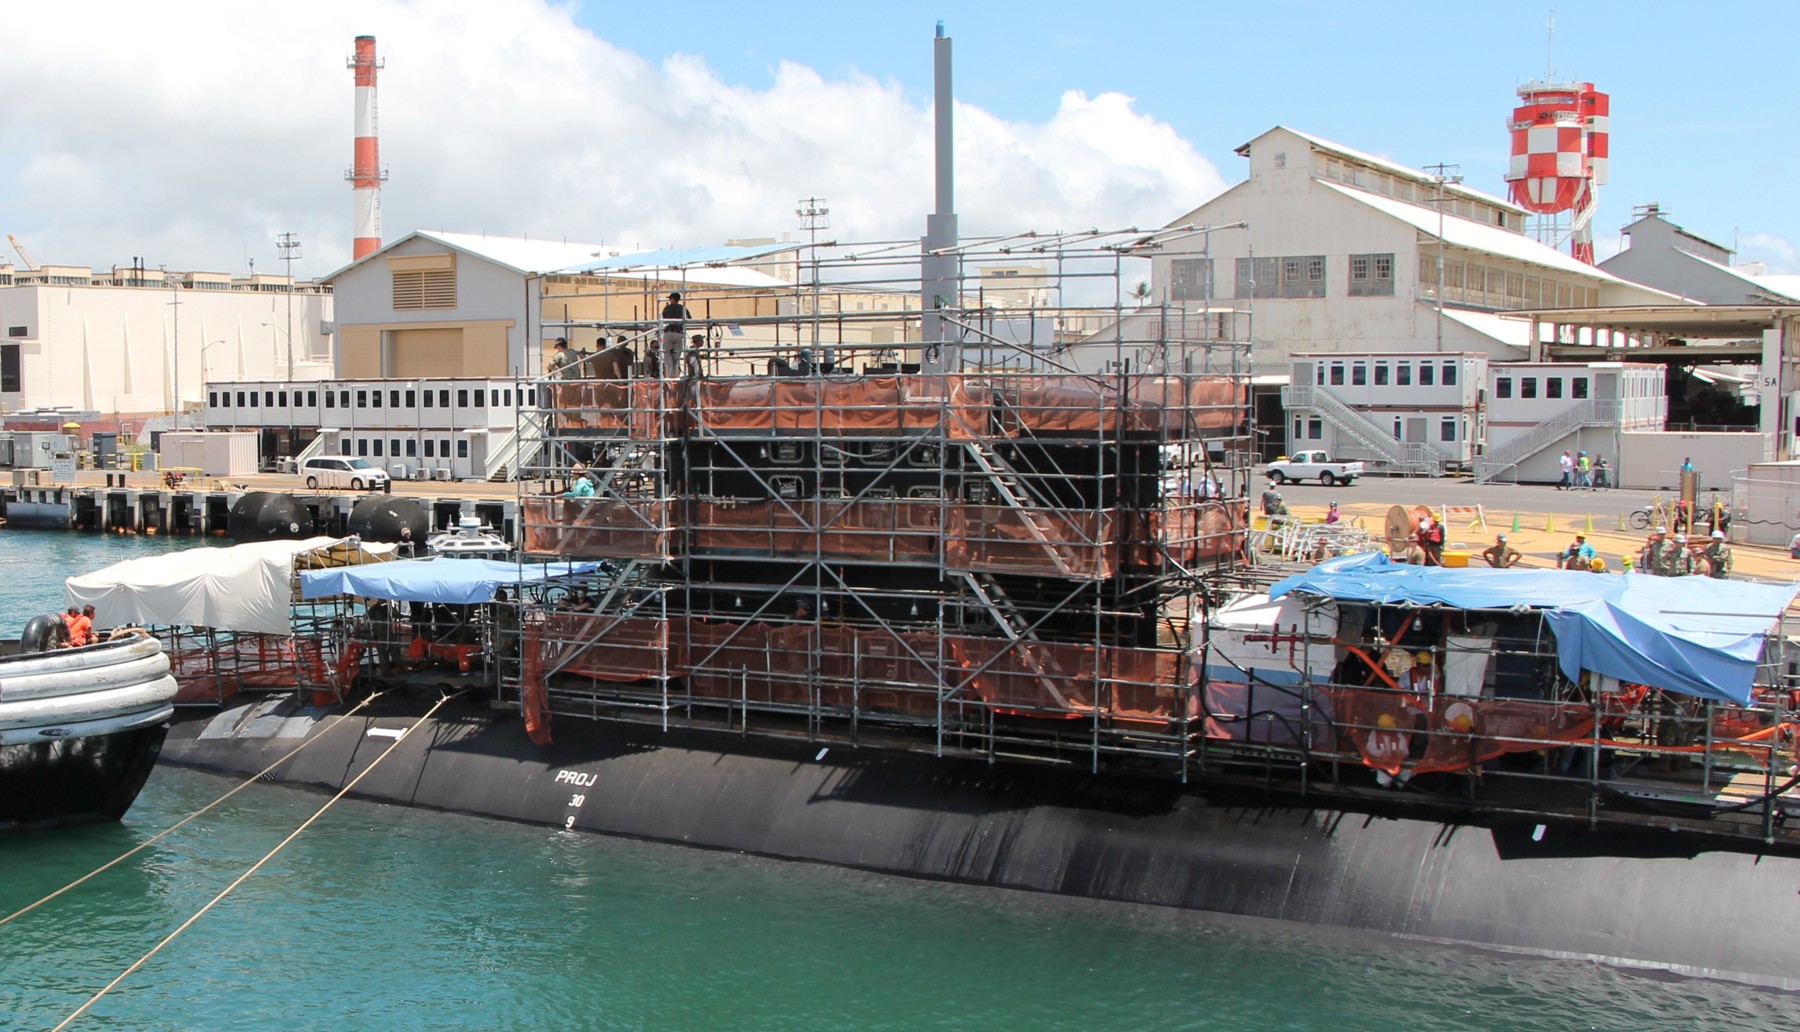 ssn-780 uss missouri virginia class attack submarine us navy 52 pearl harbor naval shipyard imf hawaii